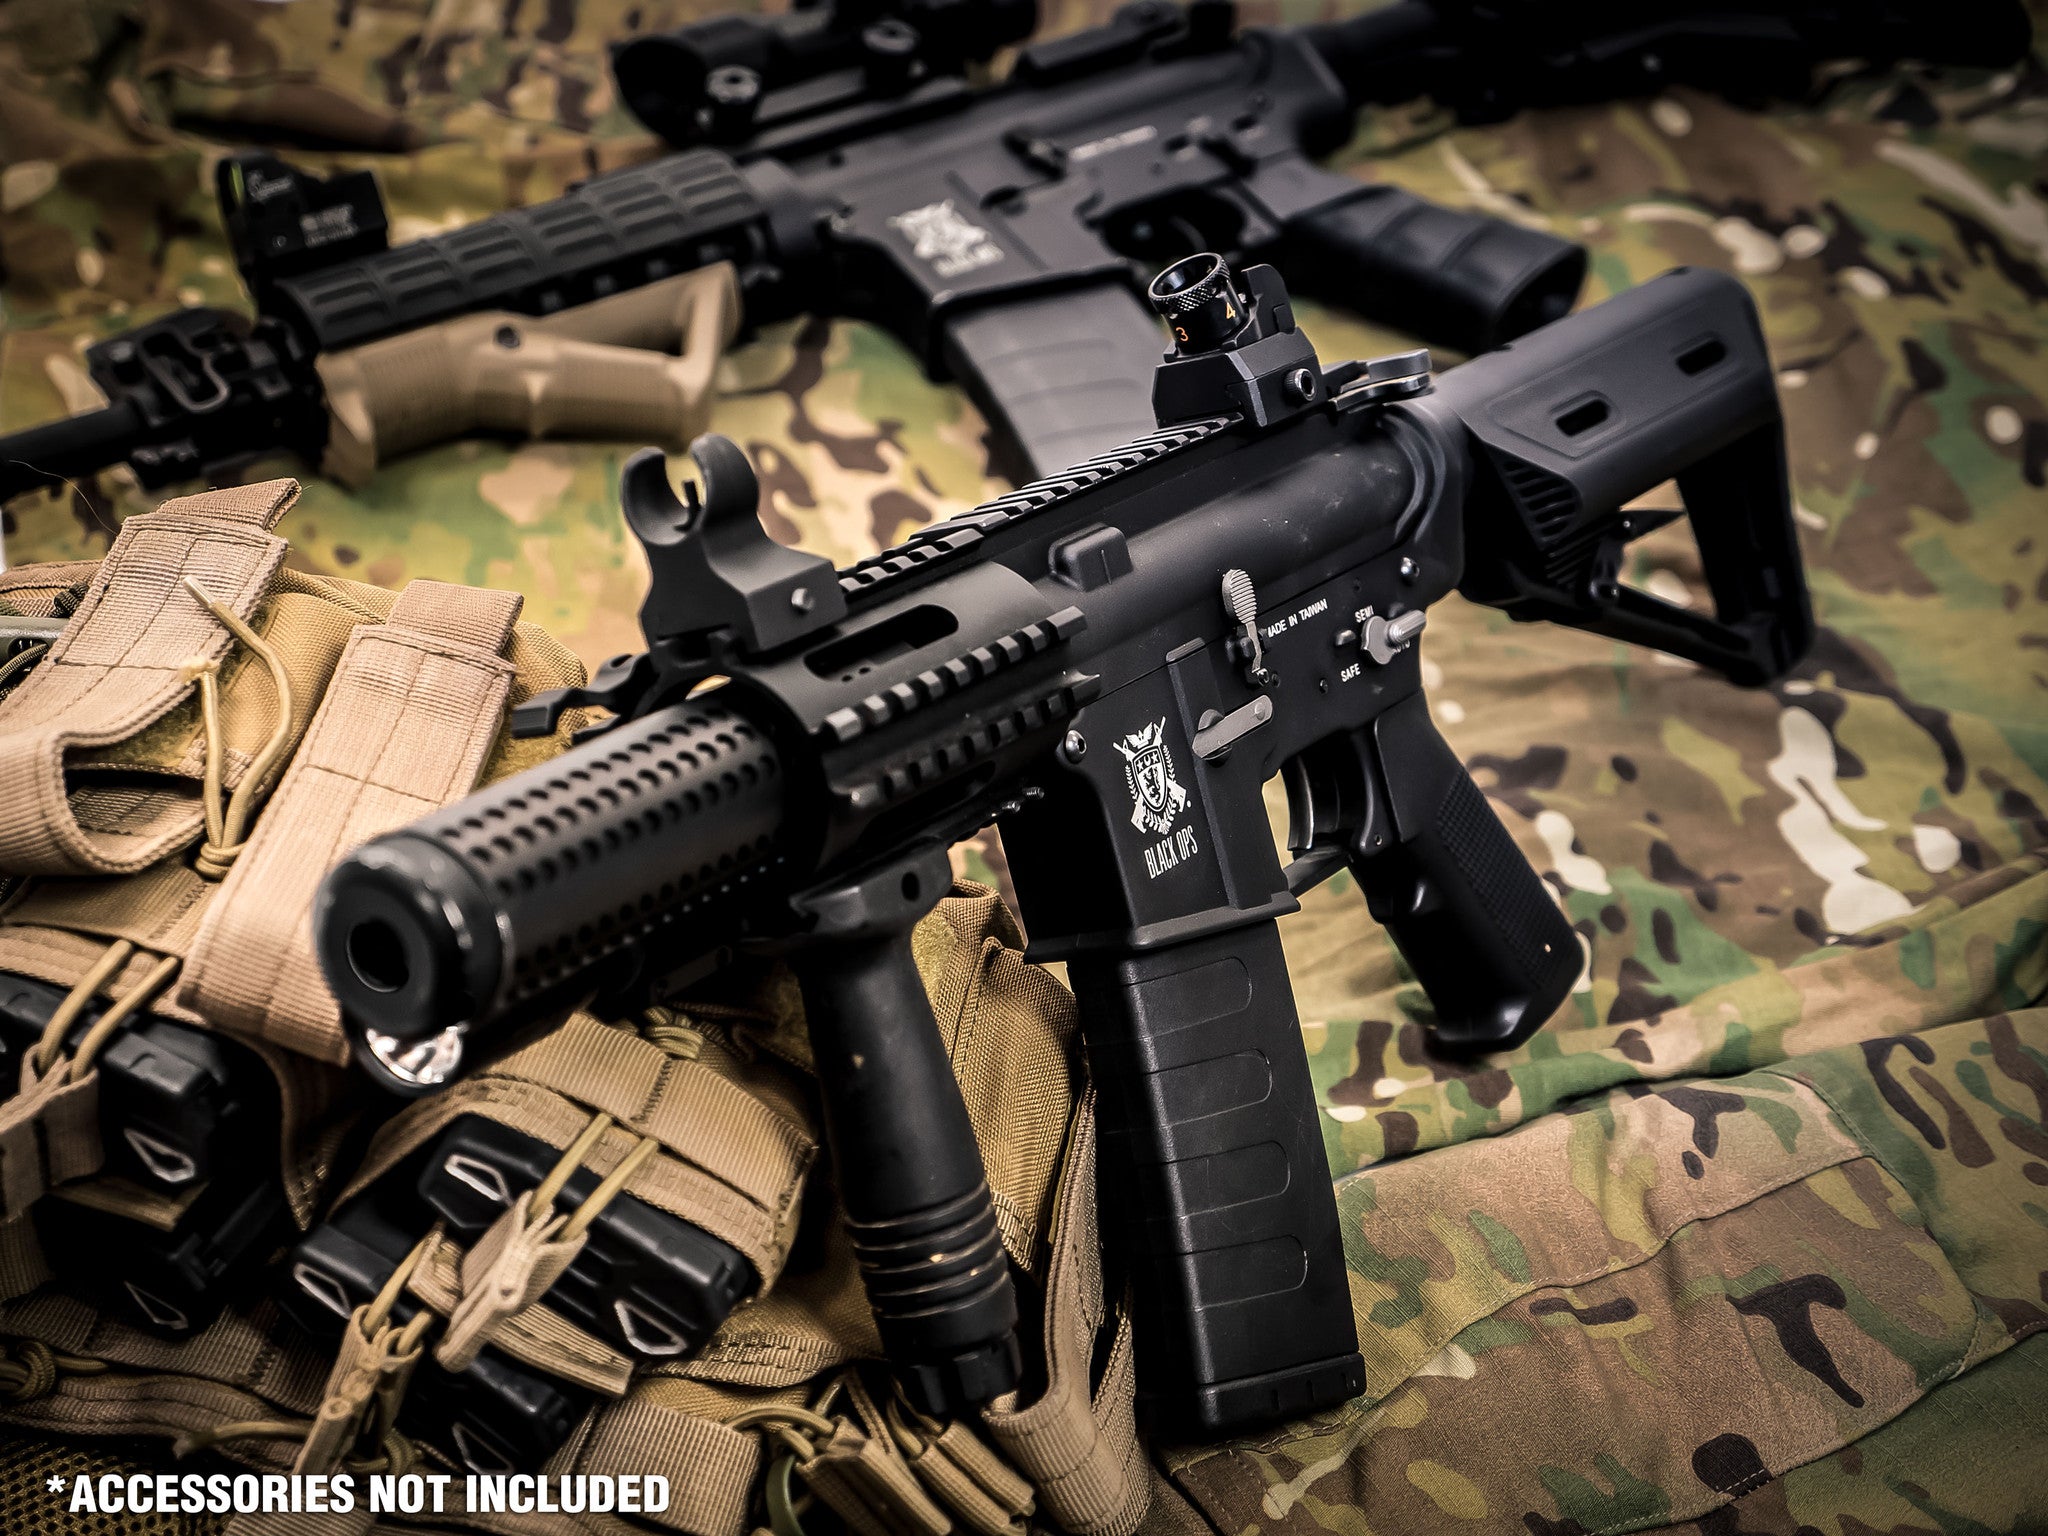 Carabine plomb Black Ops Sniper Scope 4X32 Bipied Sil